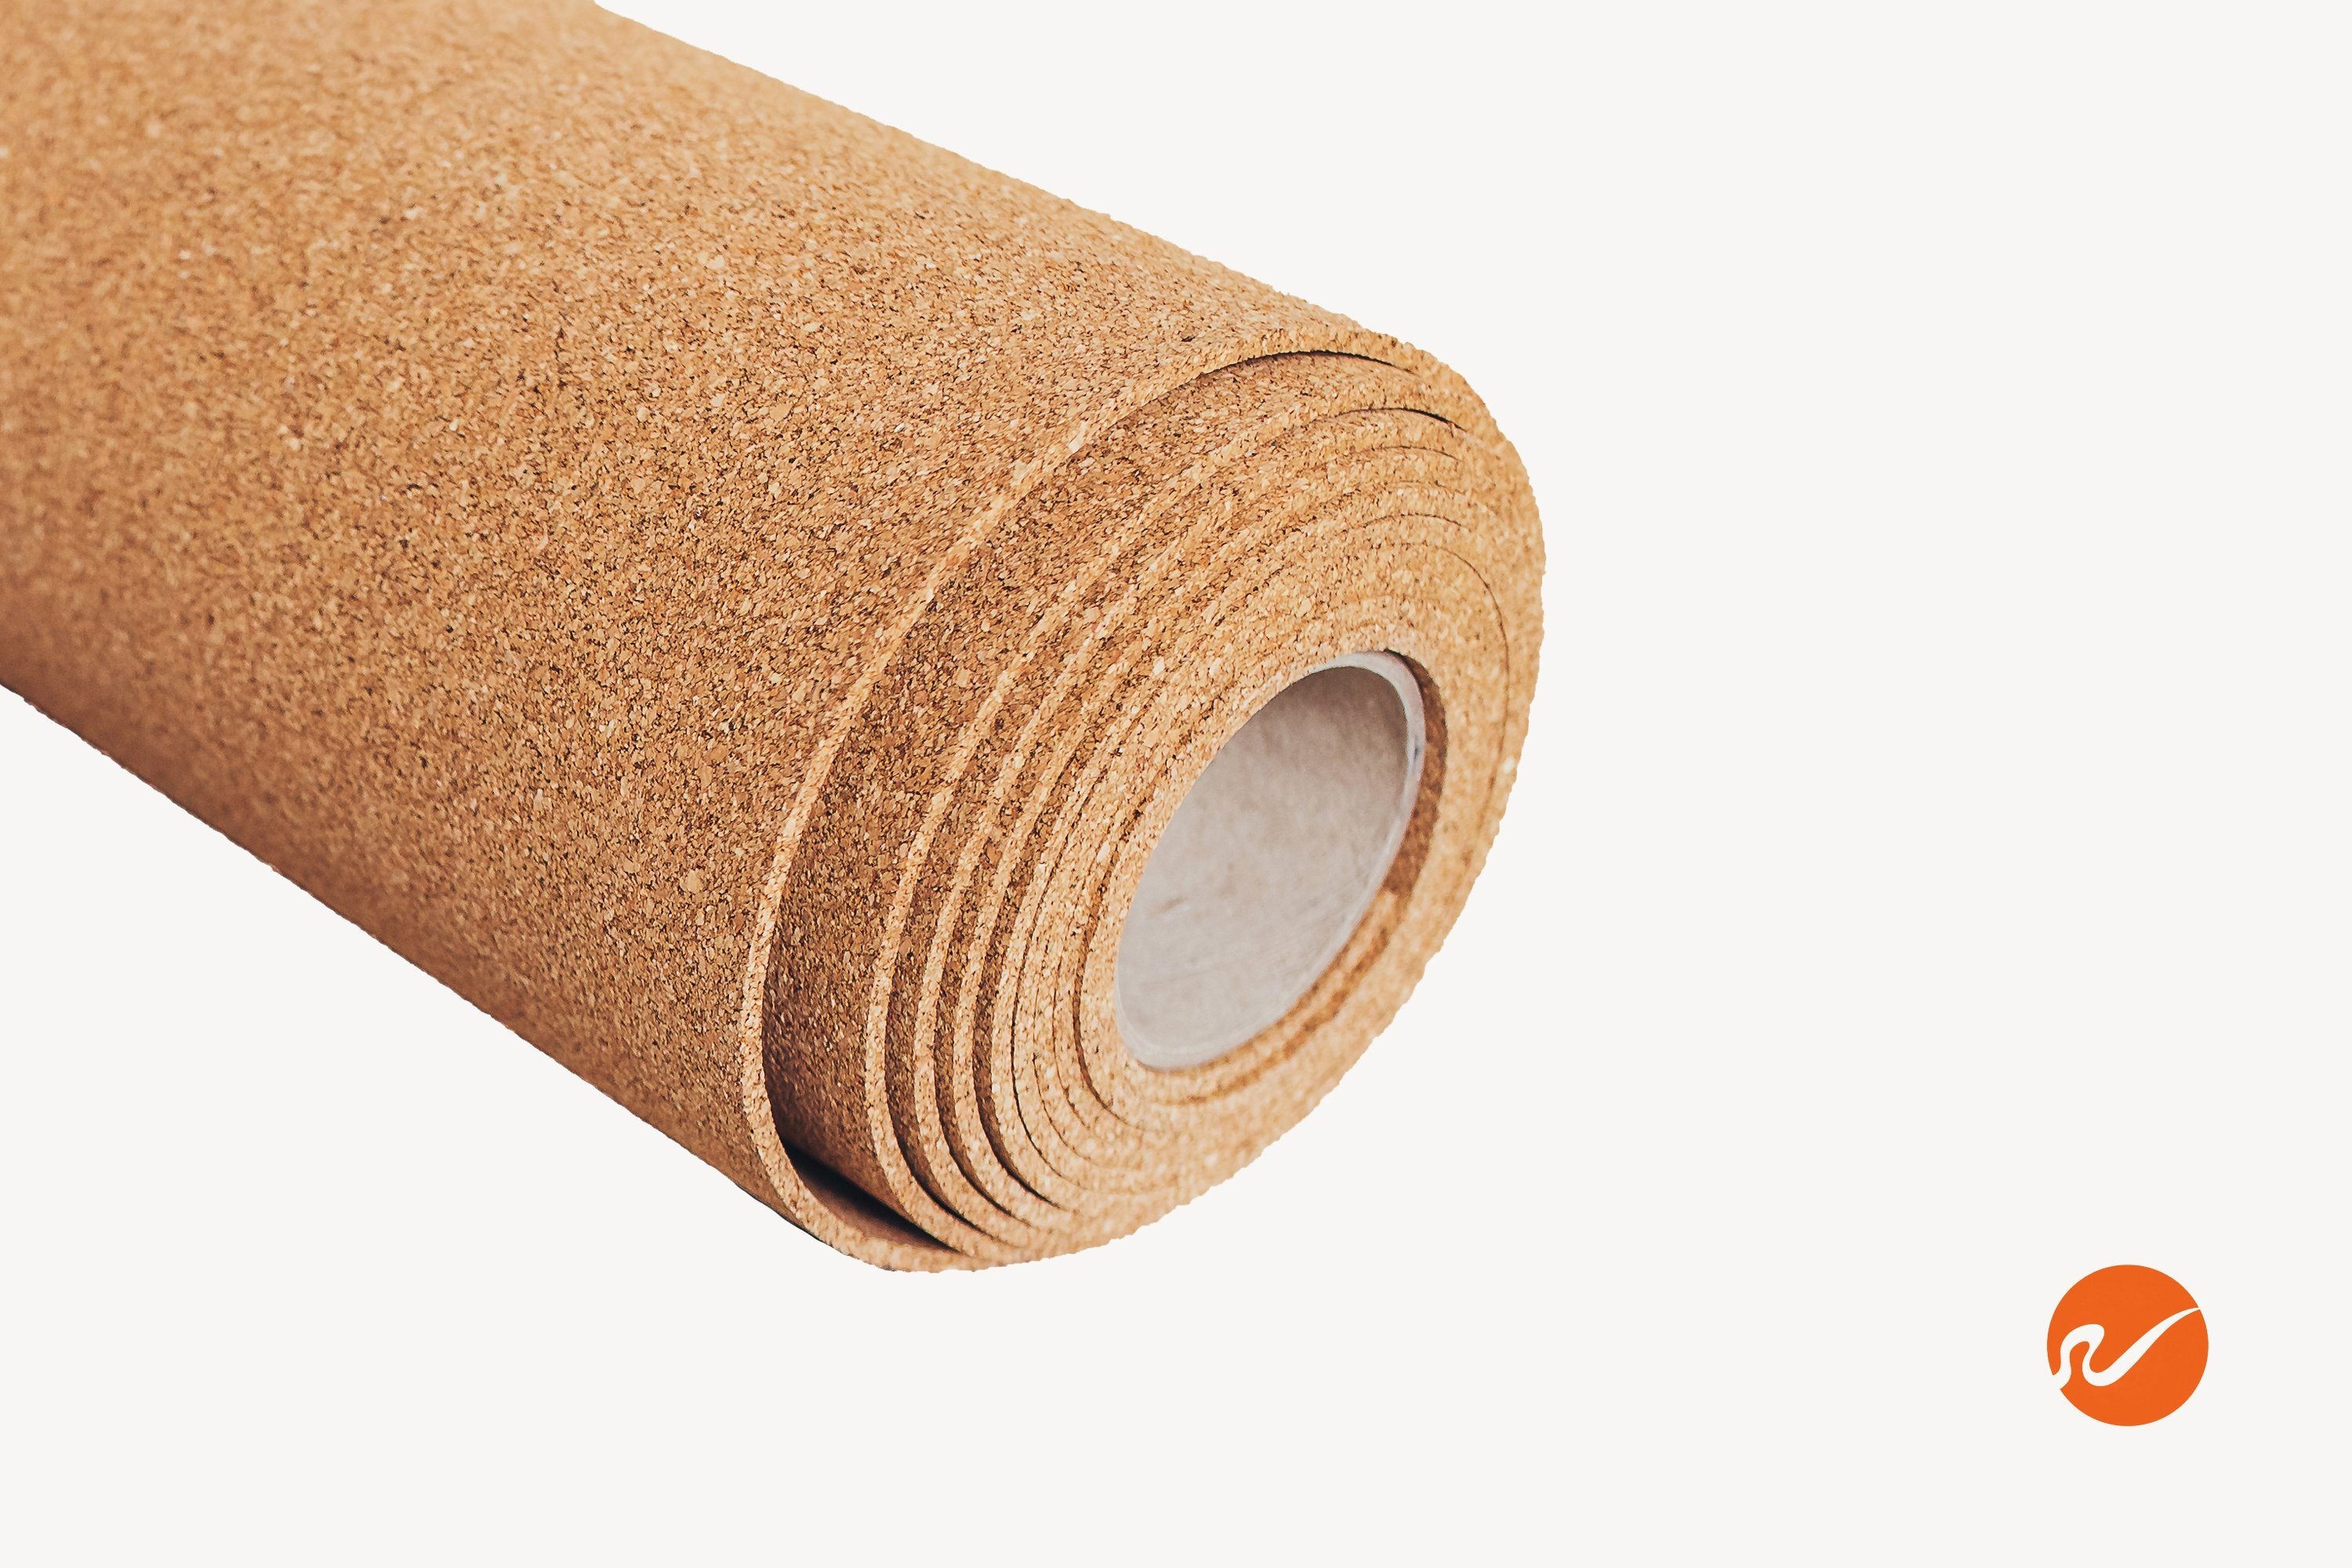 Cork Roll - 1/16 x 24 x 30 feet - Roll of cork